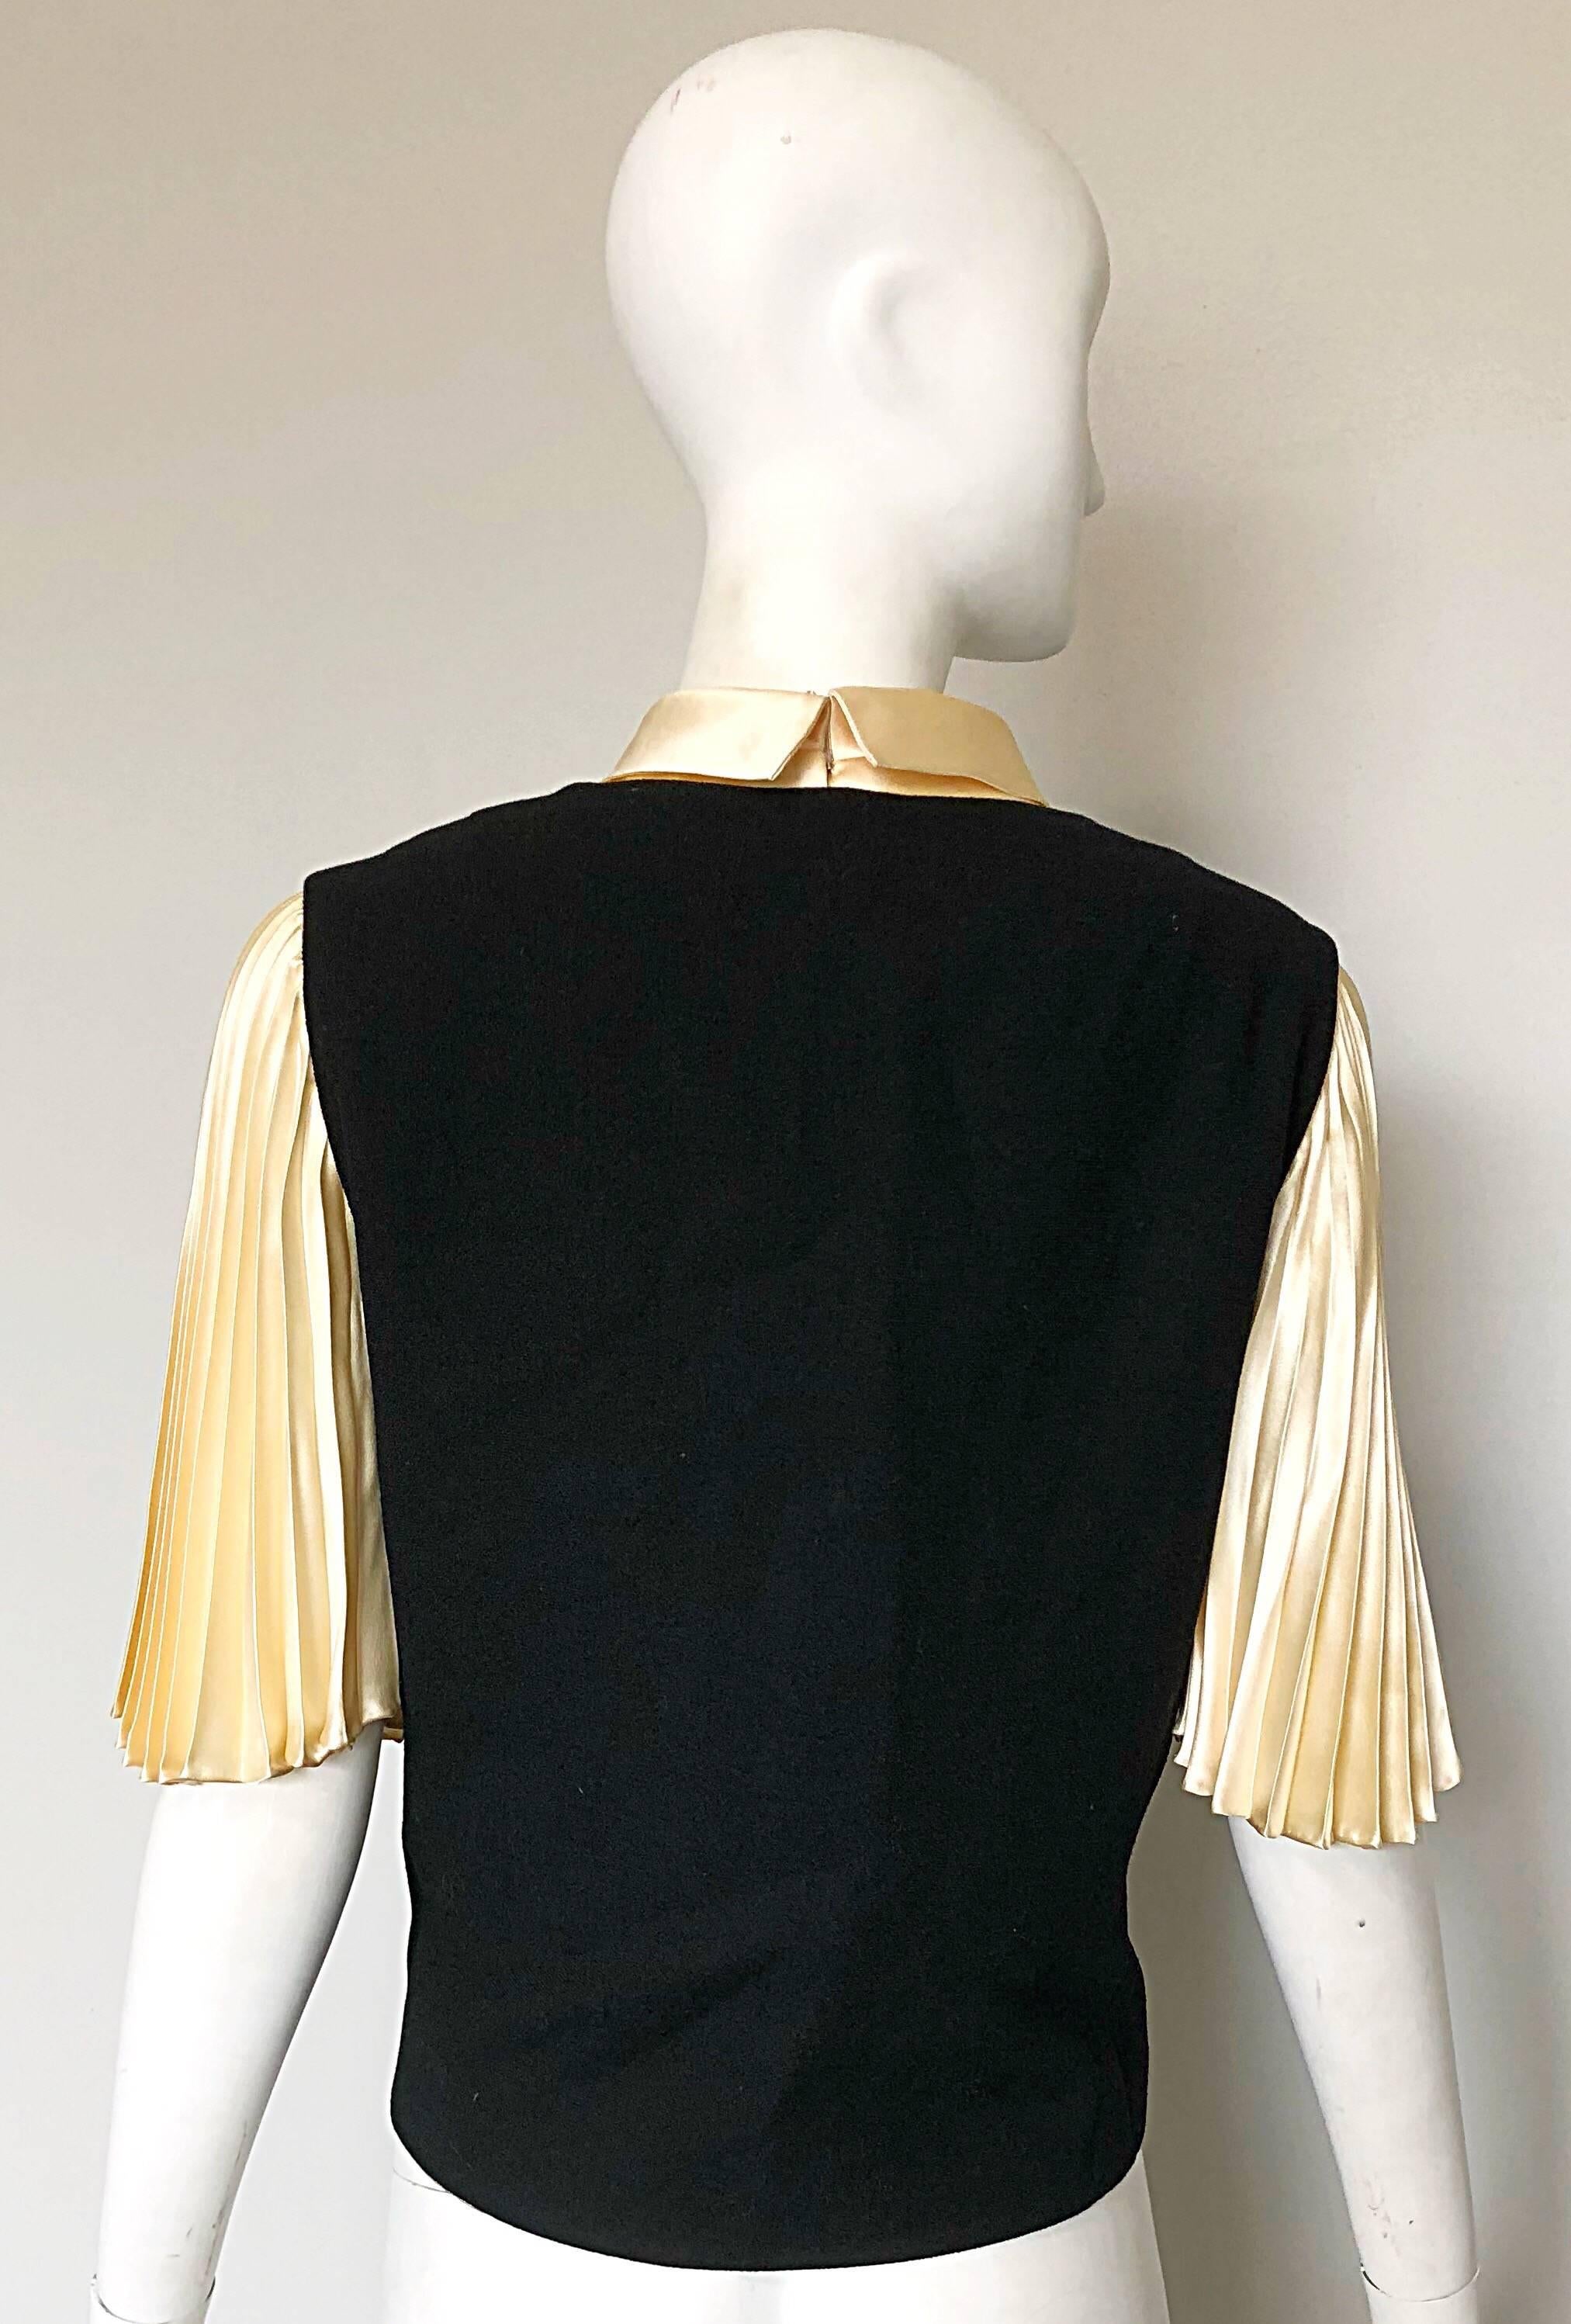 Cardinali 1960s Original Sample Ivory Silk Blouse + Black Rhinestone Waistcoat For Sale 2